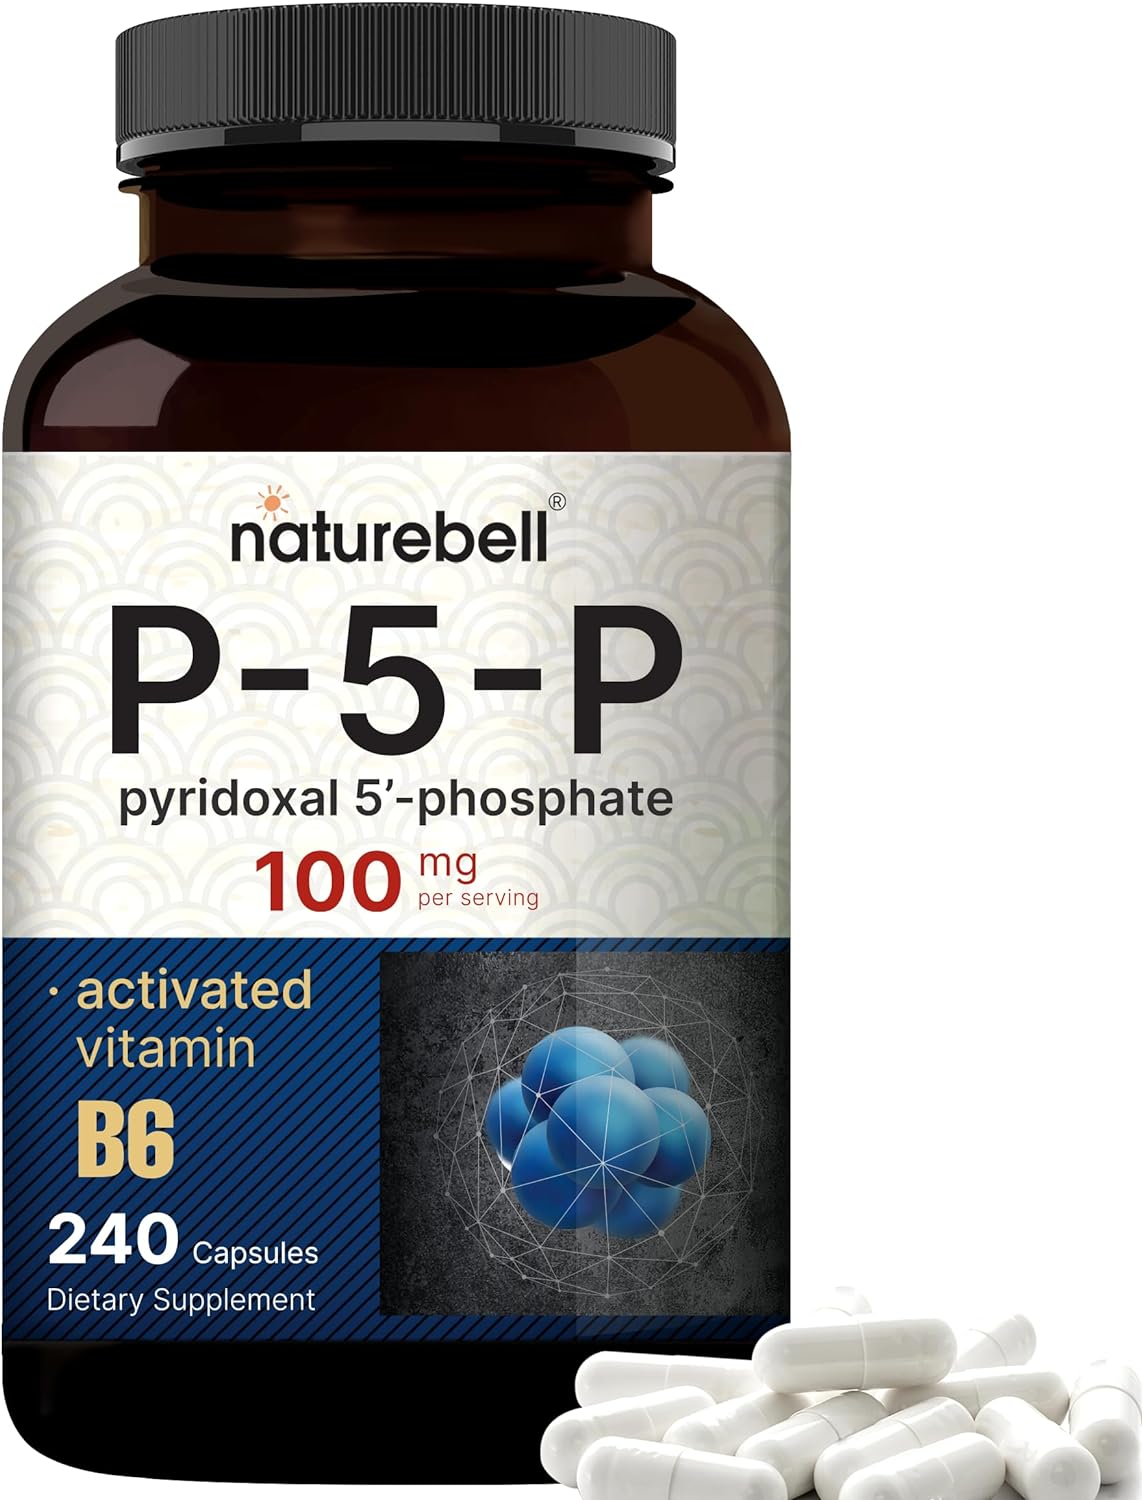 NatureBell P5P Vitamin B6 100mg Per Serving, 240 Capsules | Activated